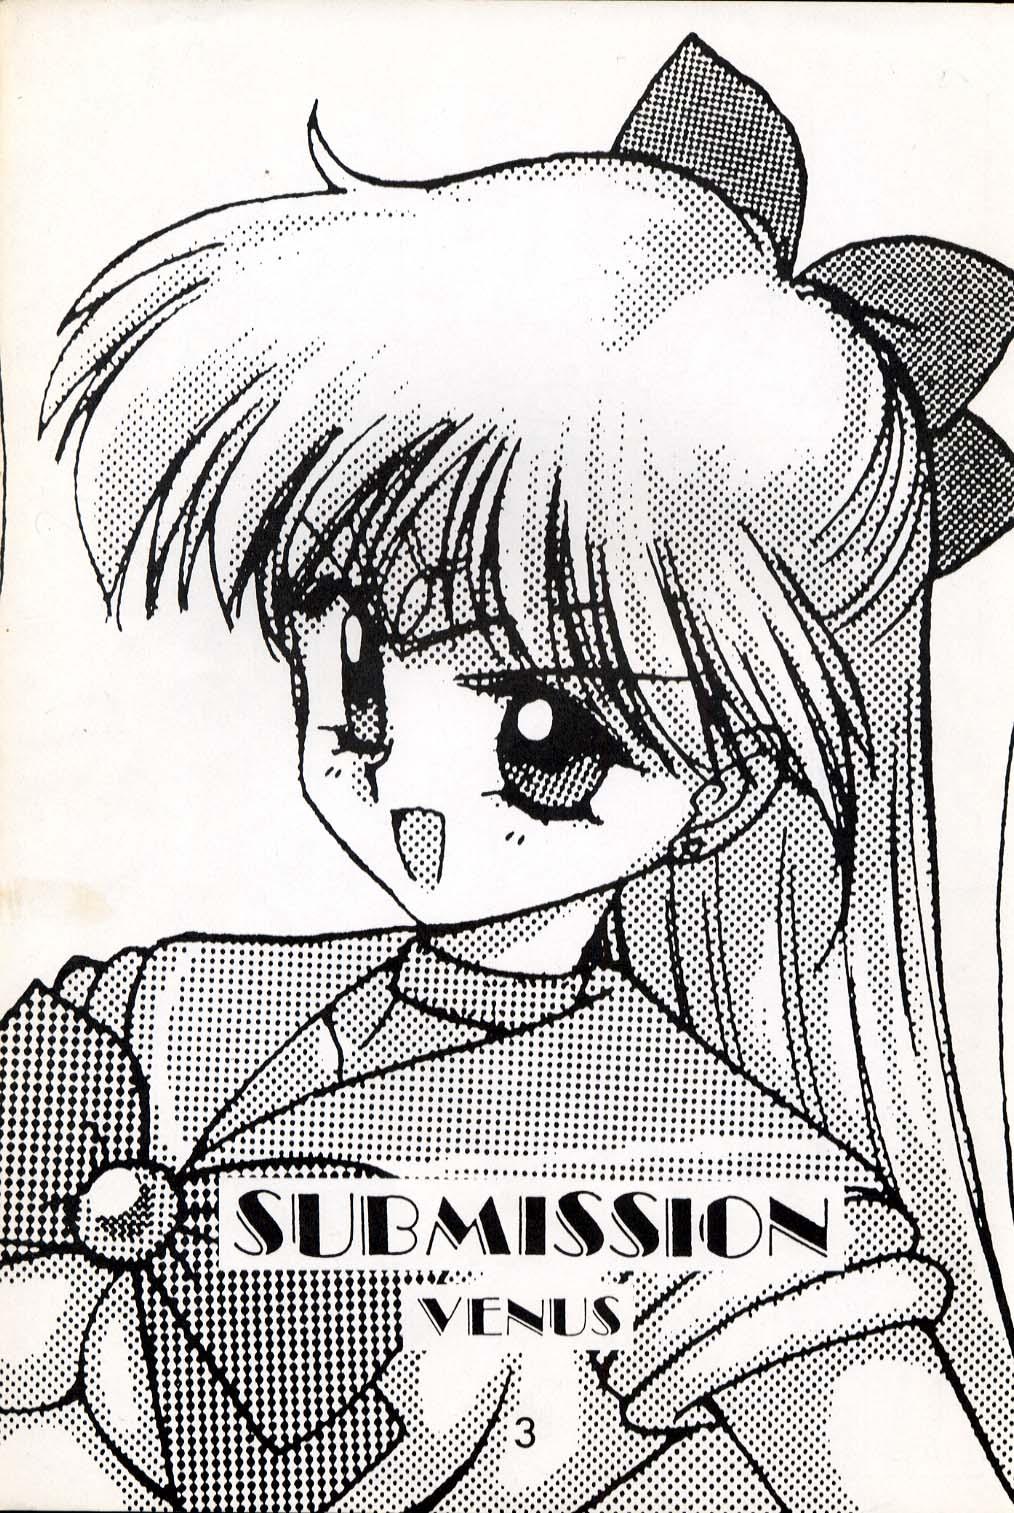 Muslim Submission Venus - Sailor moon Teen - Page 3